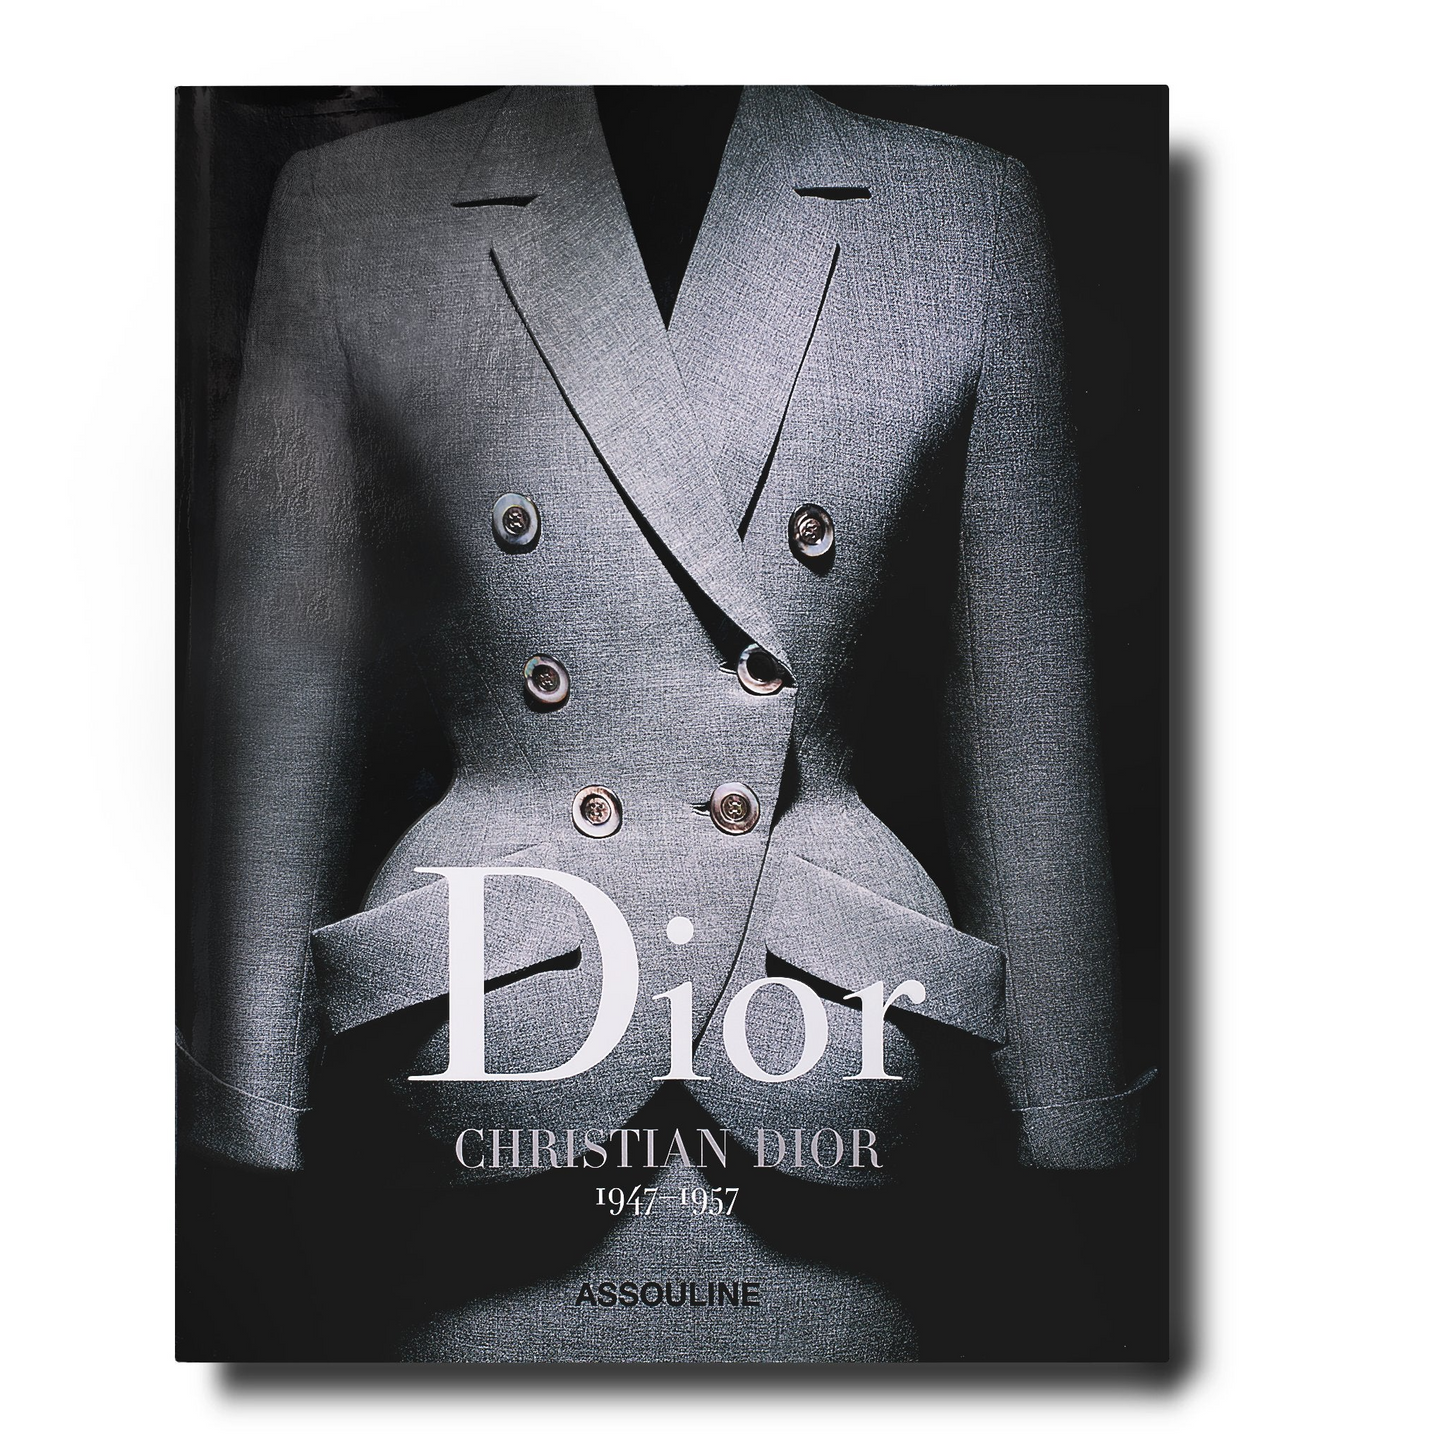 Dior Series